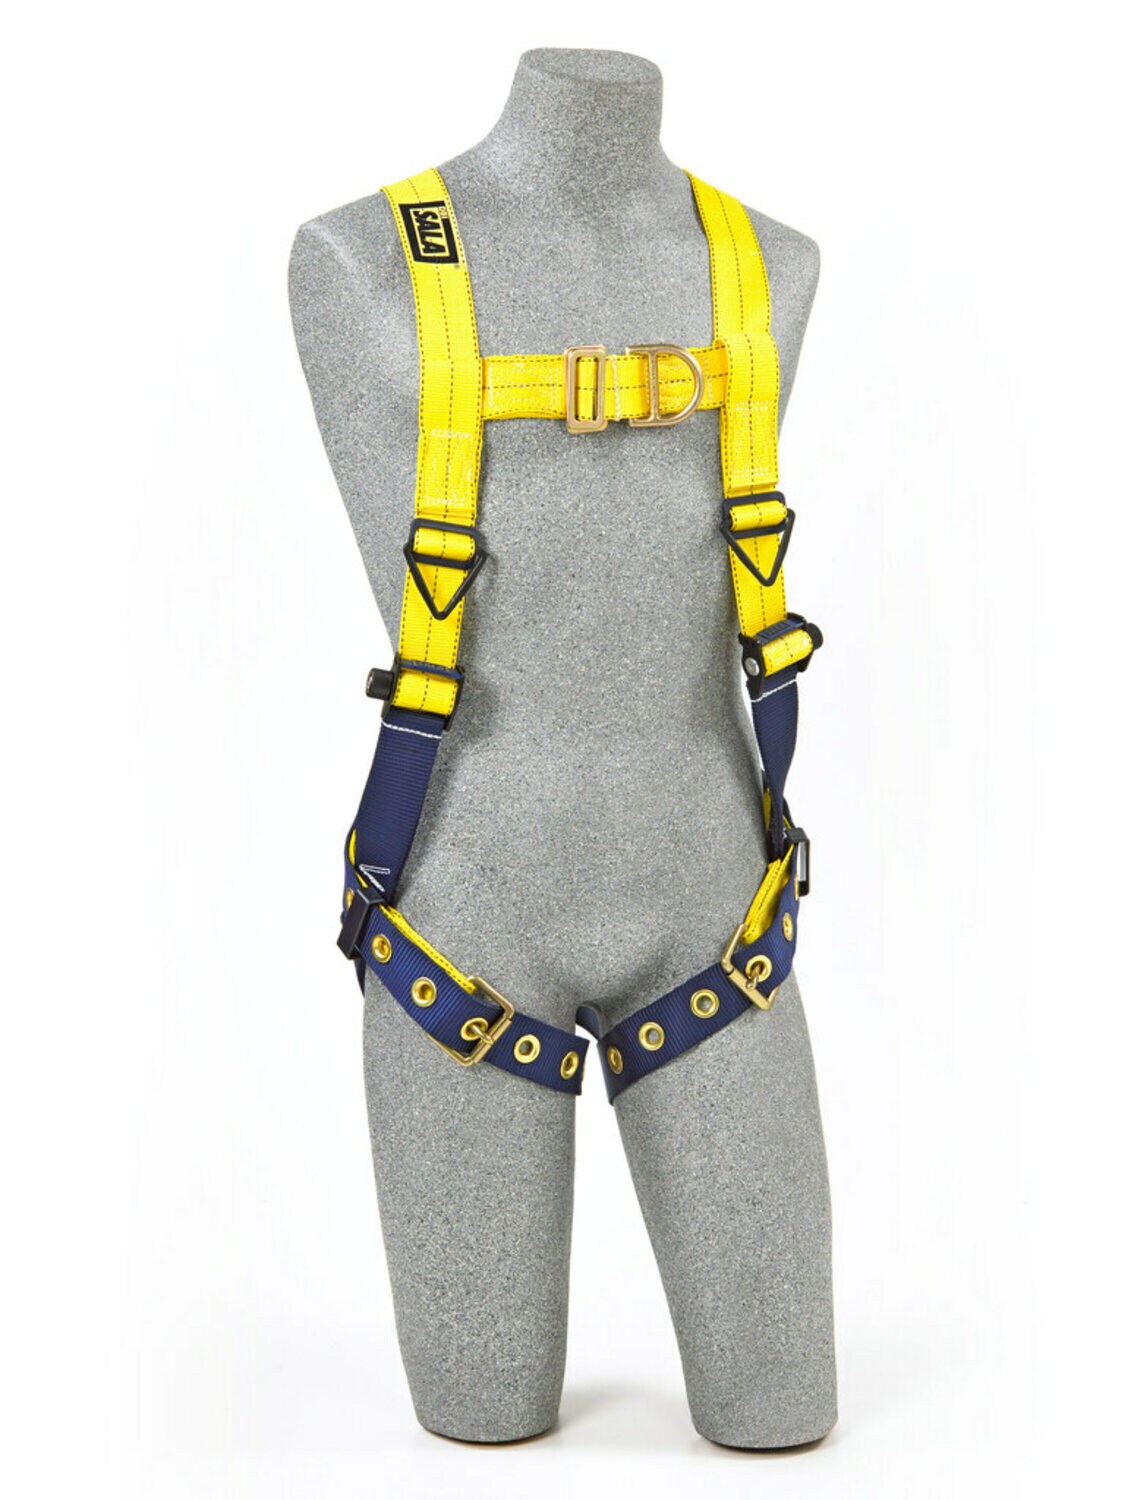 7012815625 - 3M DBI-SALA Delta Vest Climbing Safety Harness 1107818, 2X